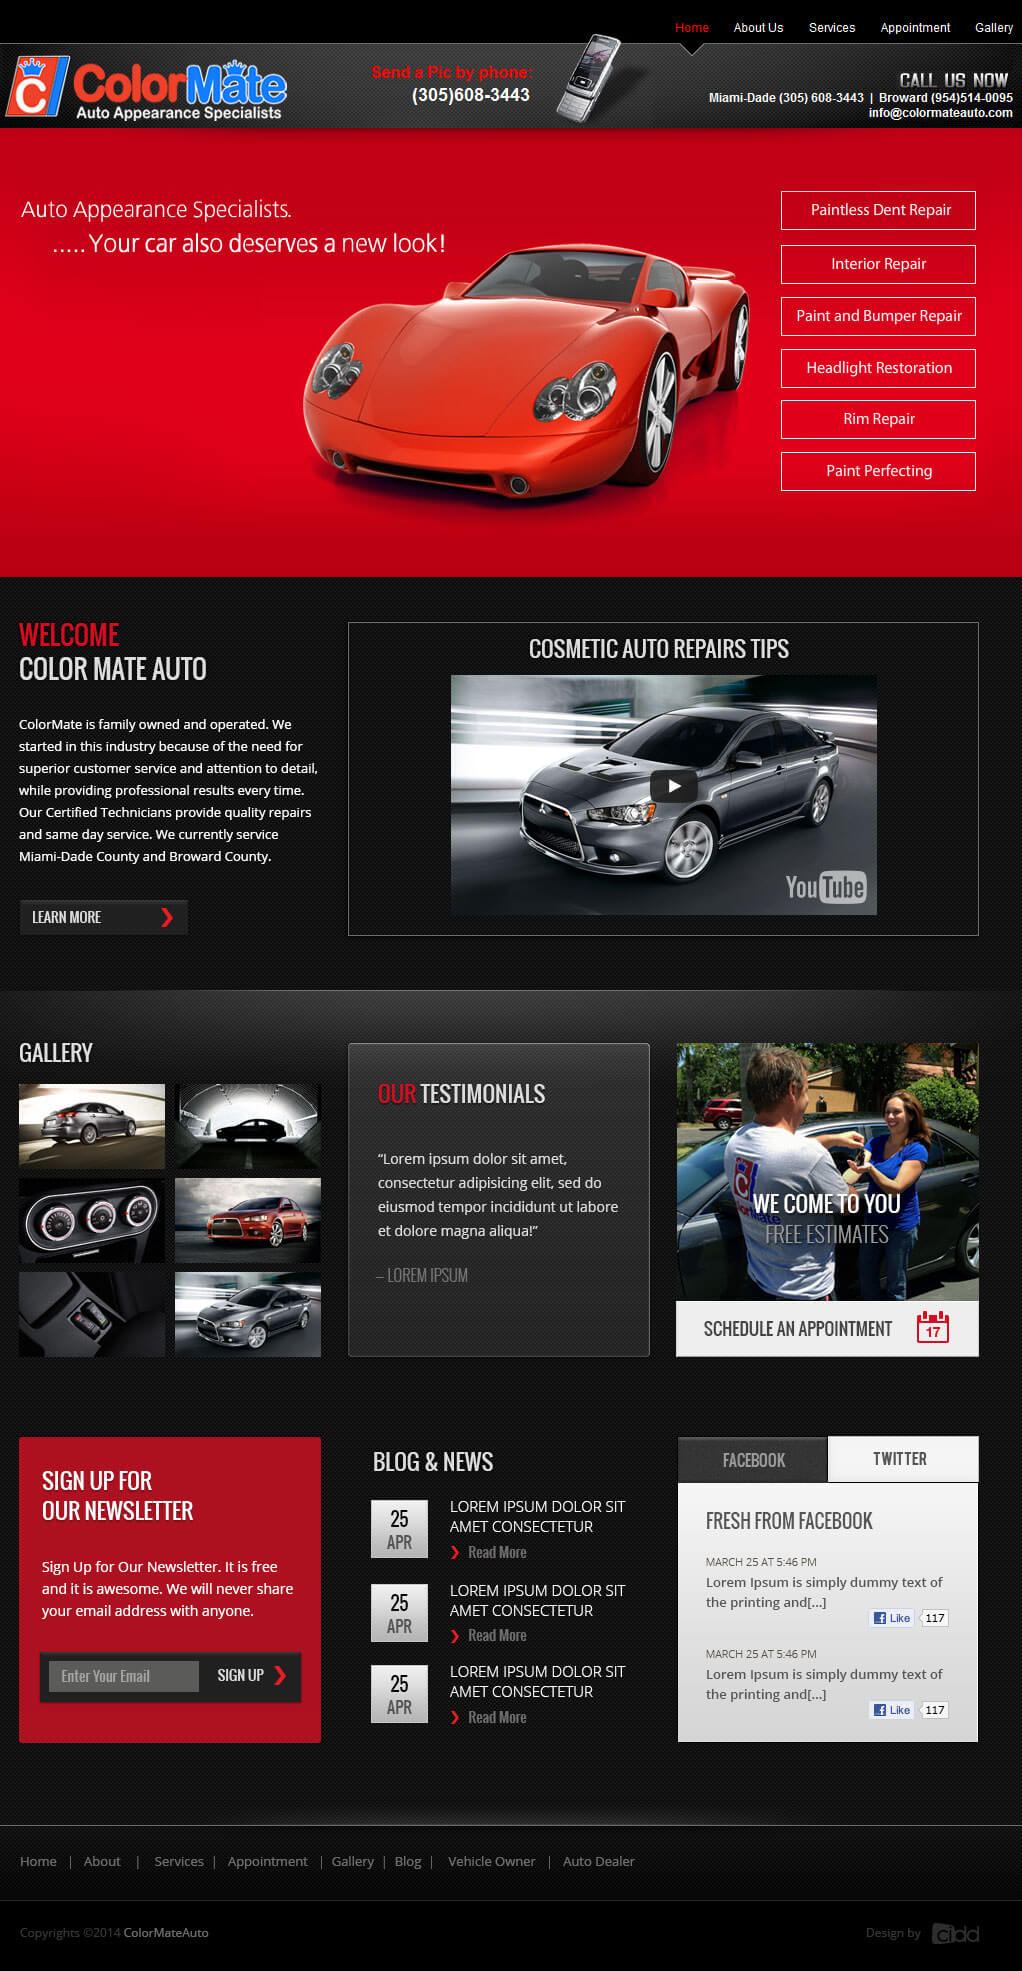 ColorMate Auto website redesign